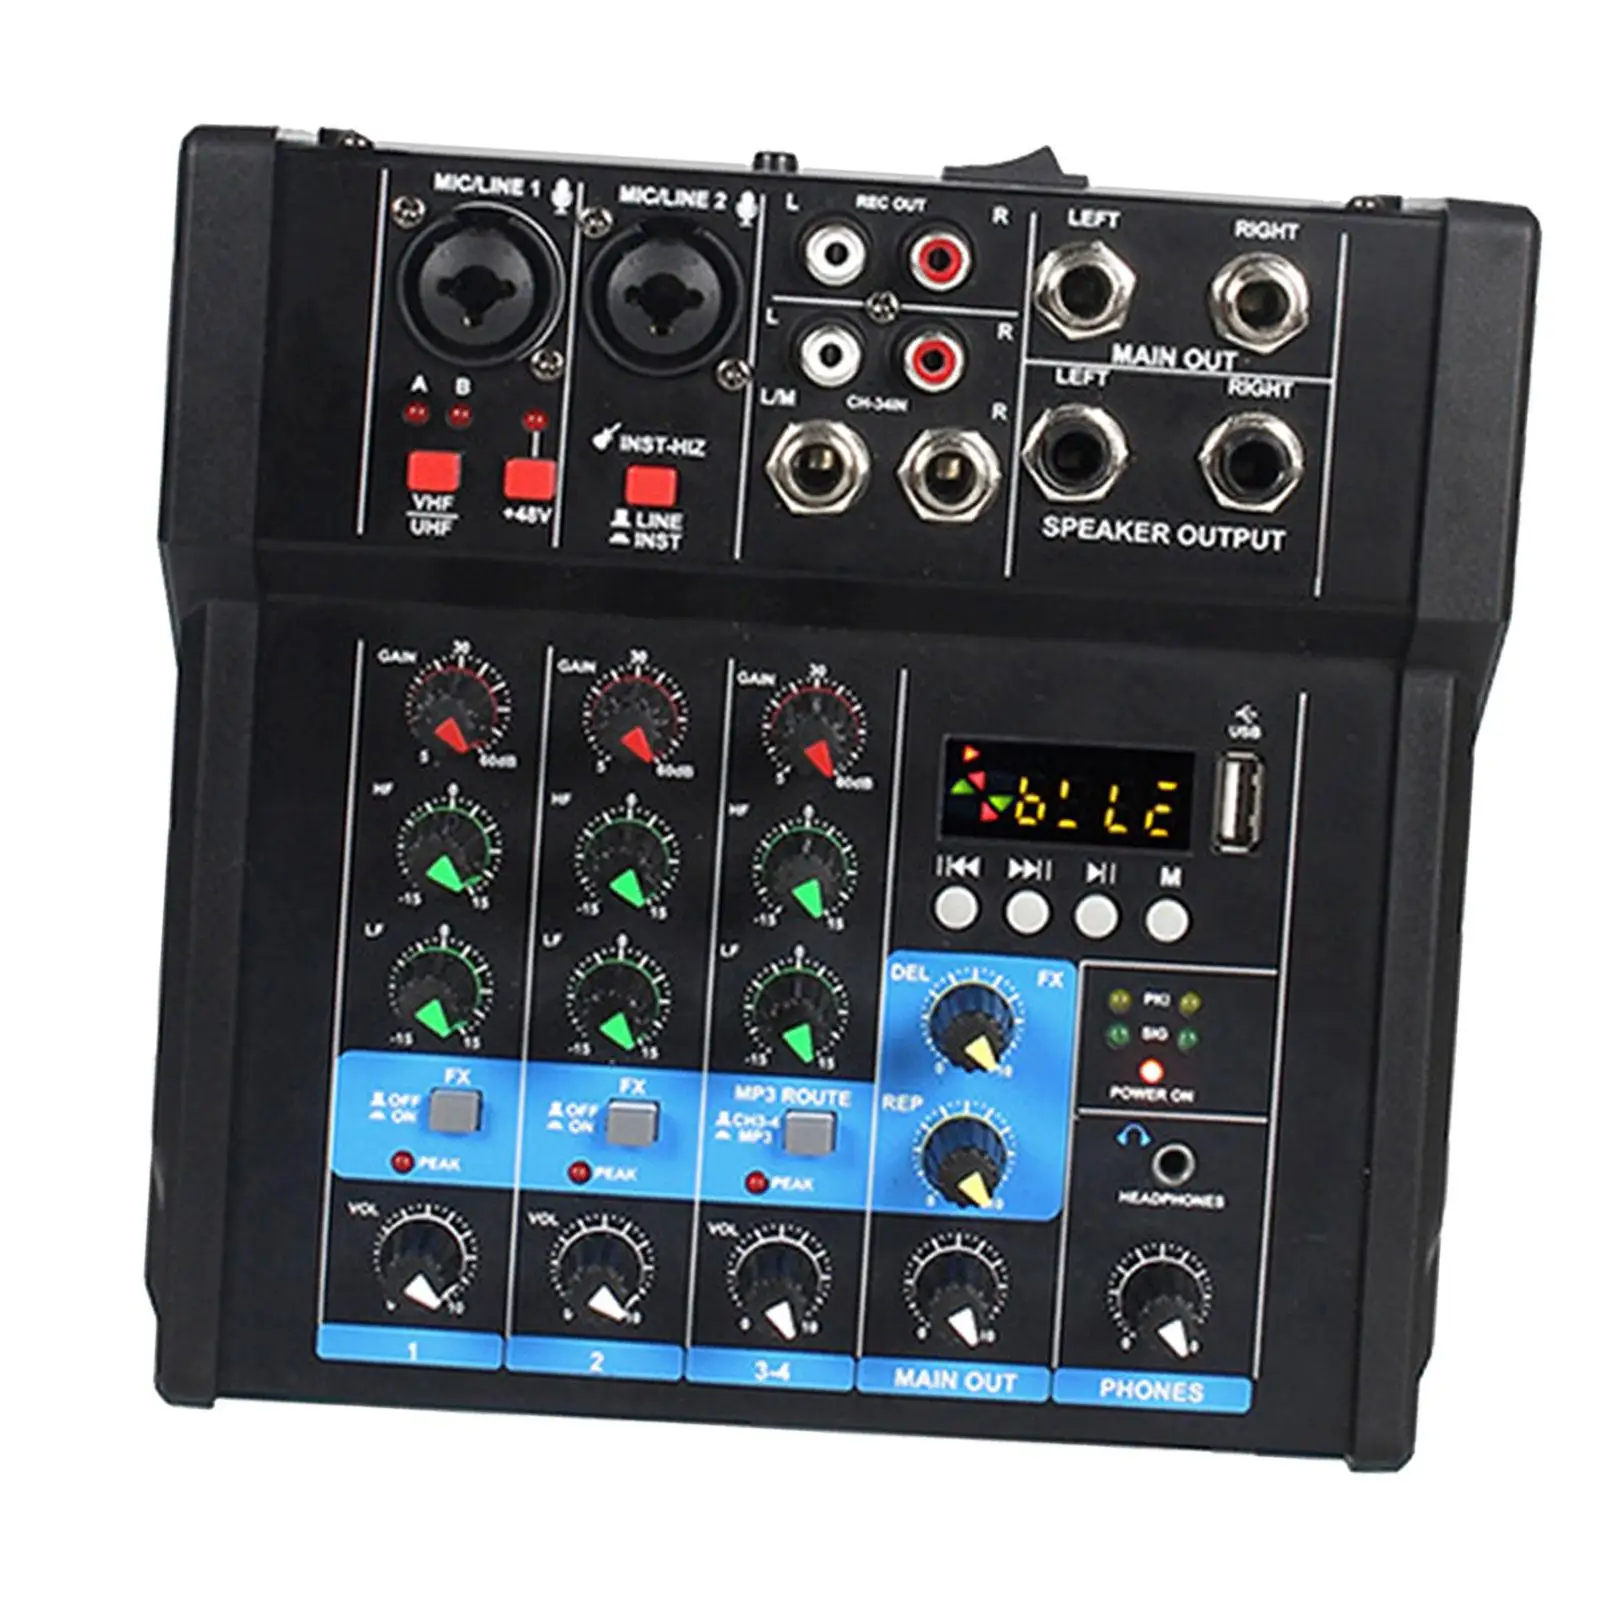 

Audio Mixer 4 Channel 48V Phantom Power Professional Sound Board Console System for Studio Recording DJ Mixing Karaoke